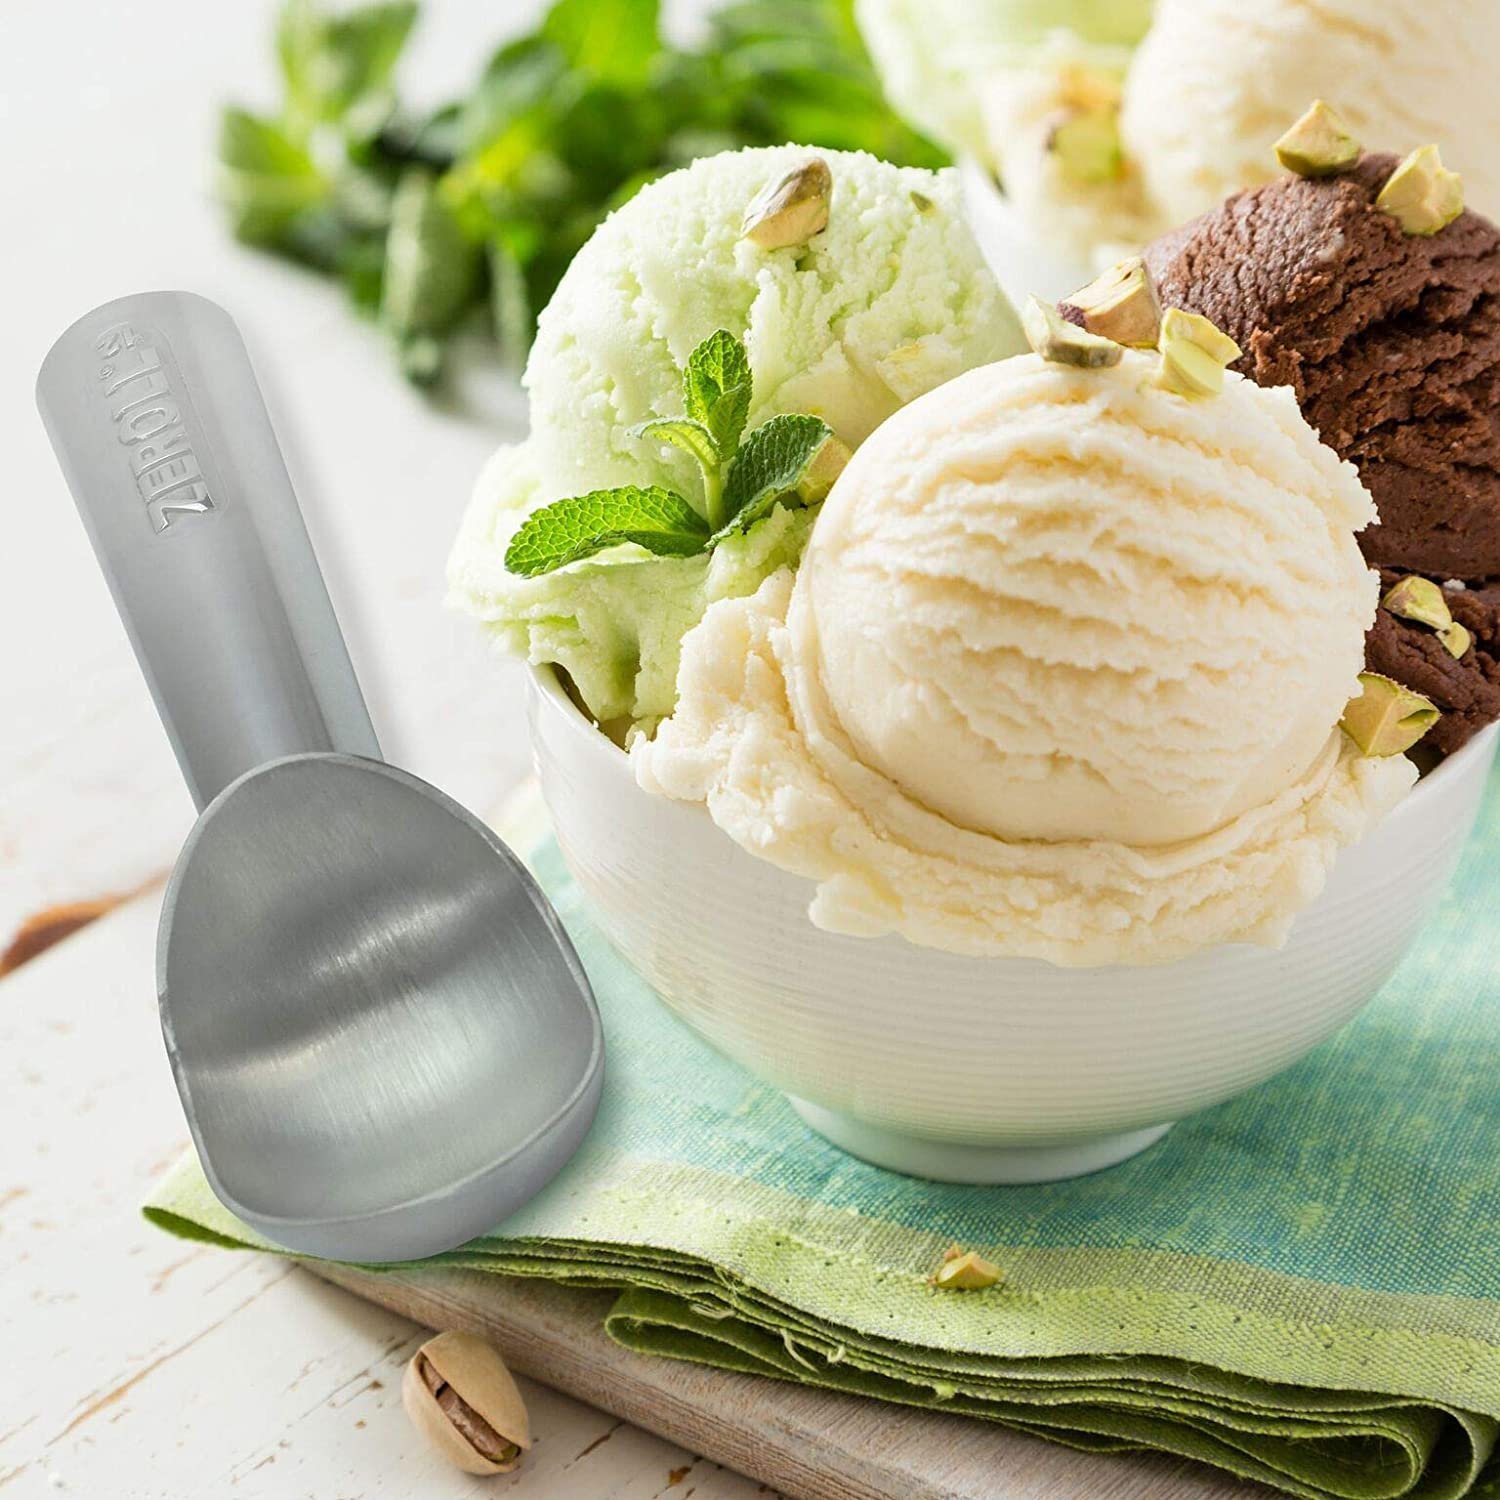 This is the best ice cream scoop ever